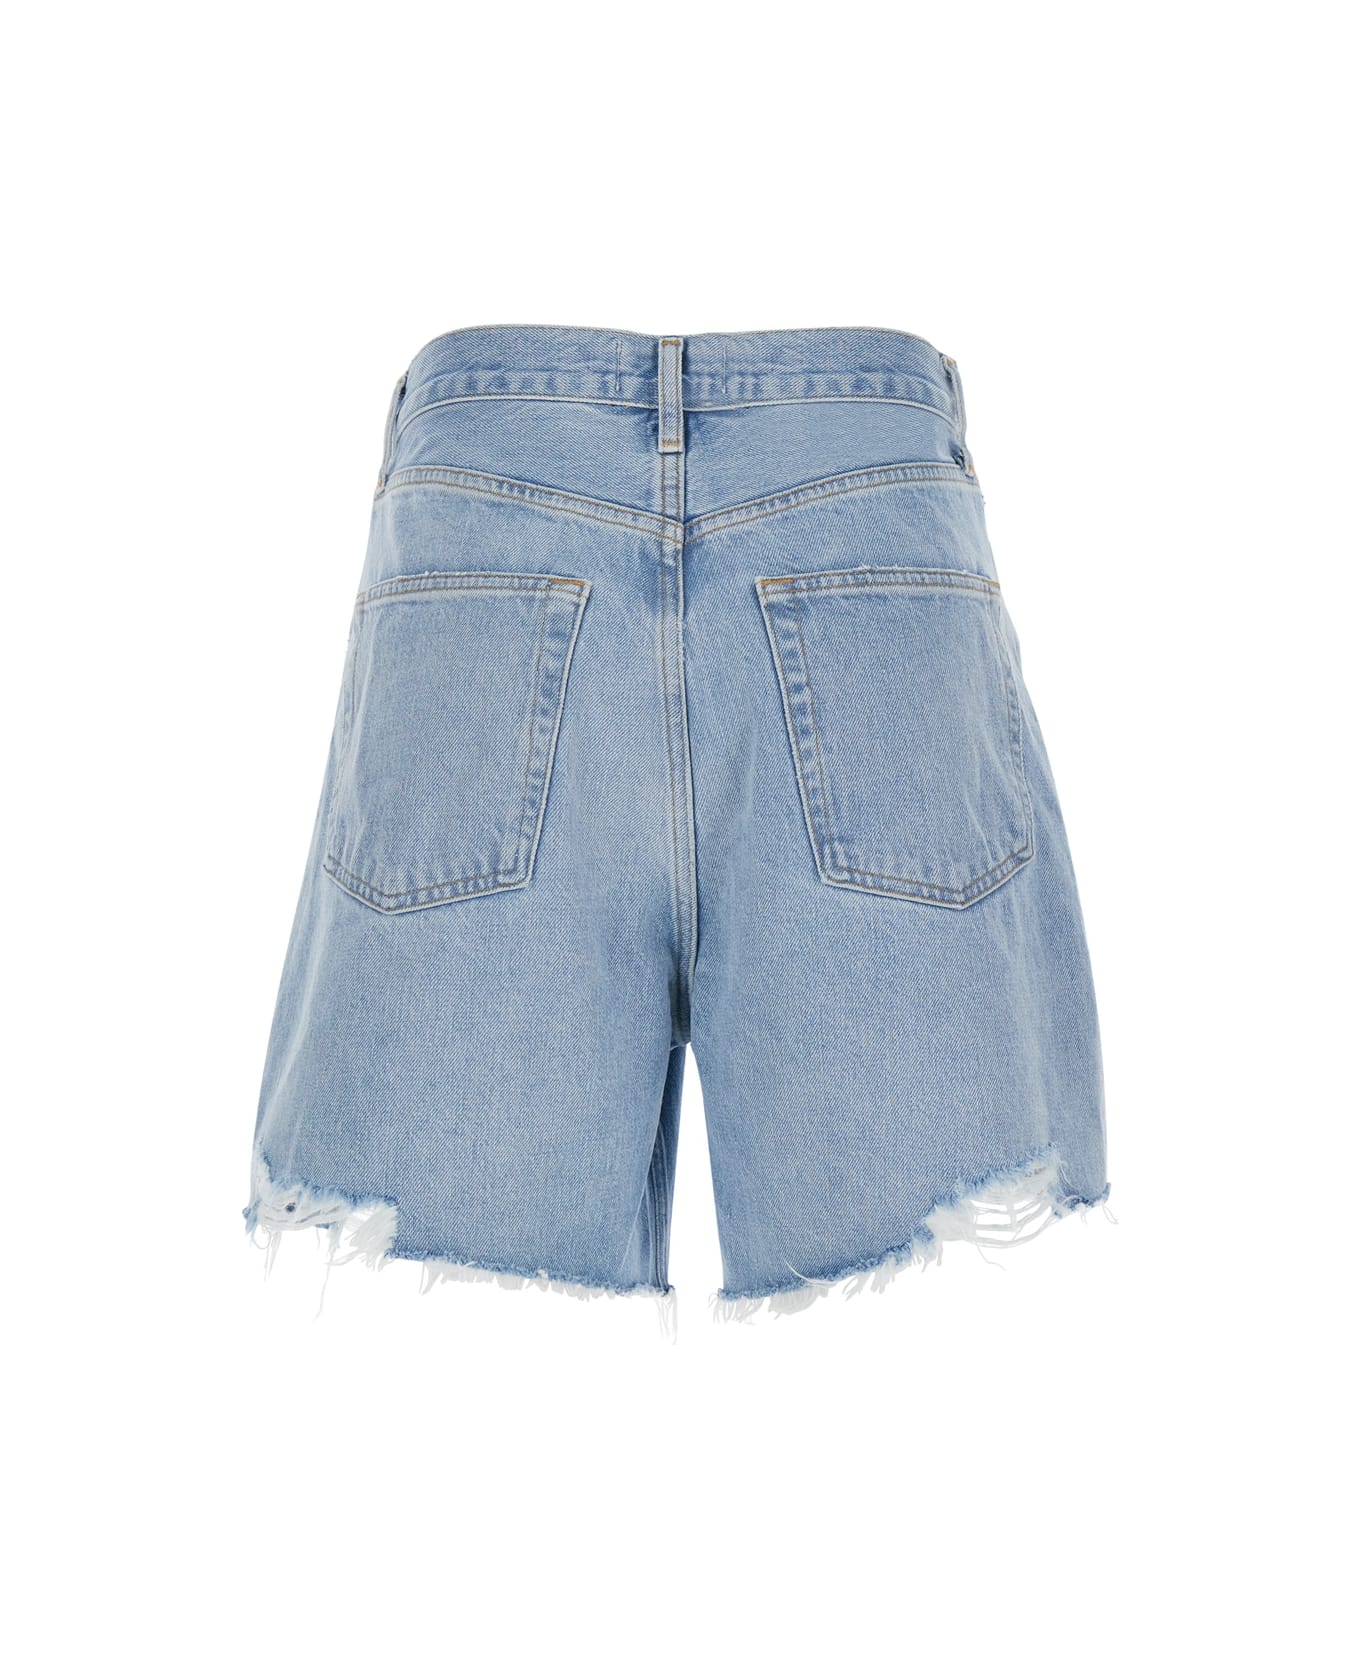 AGOLDE Light Blue Jeans Shorts In Denim Woman - Light blue ショートパンツ